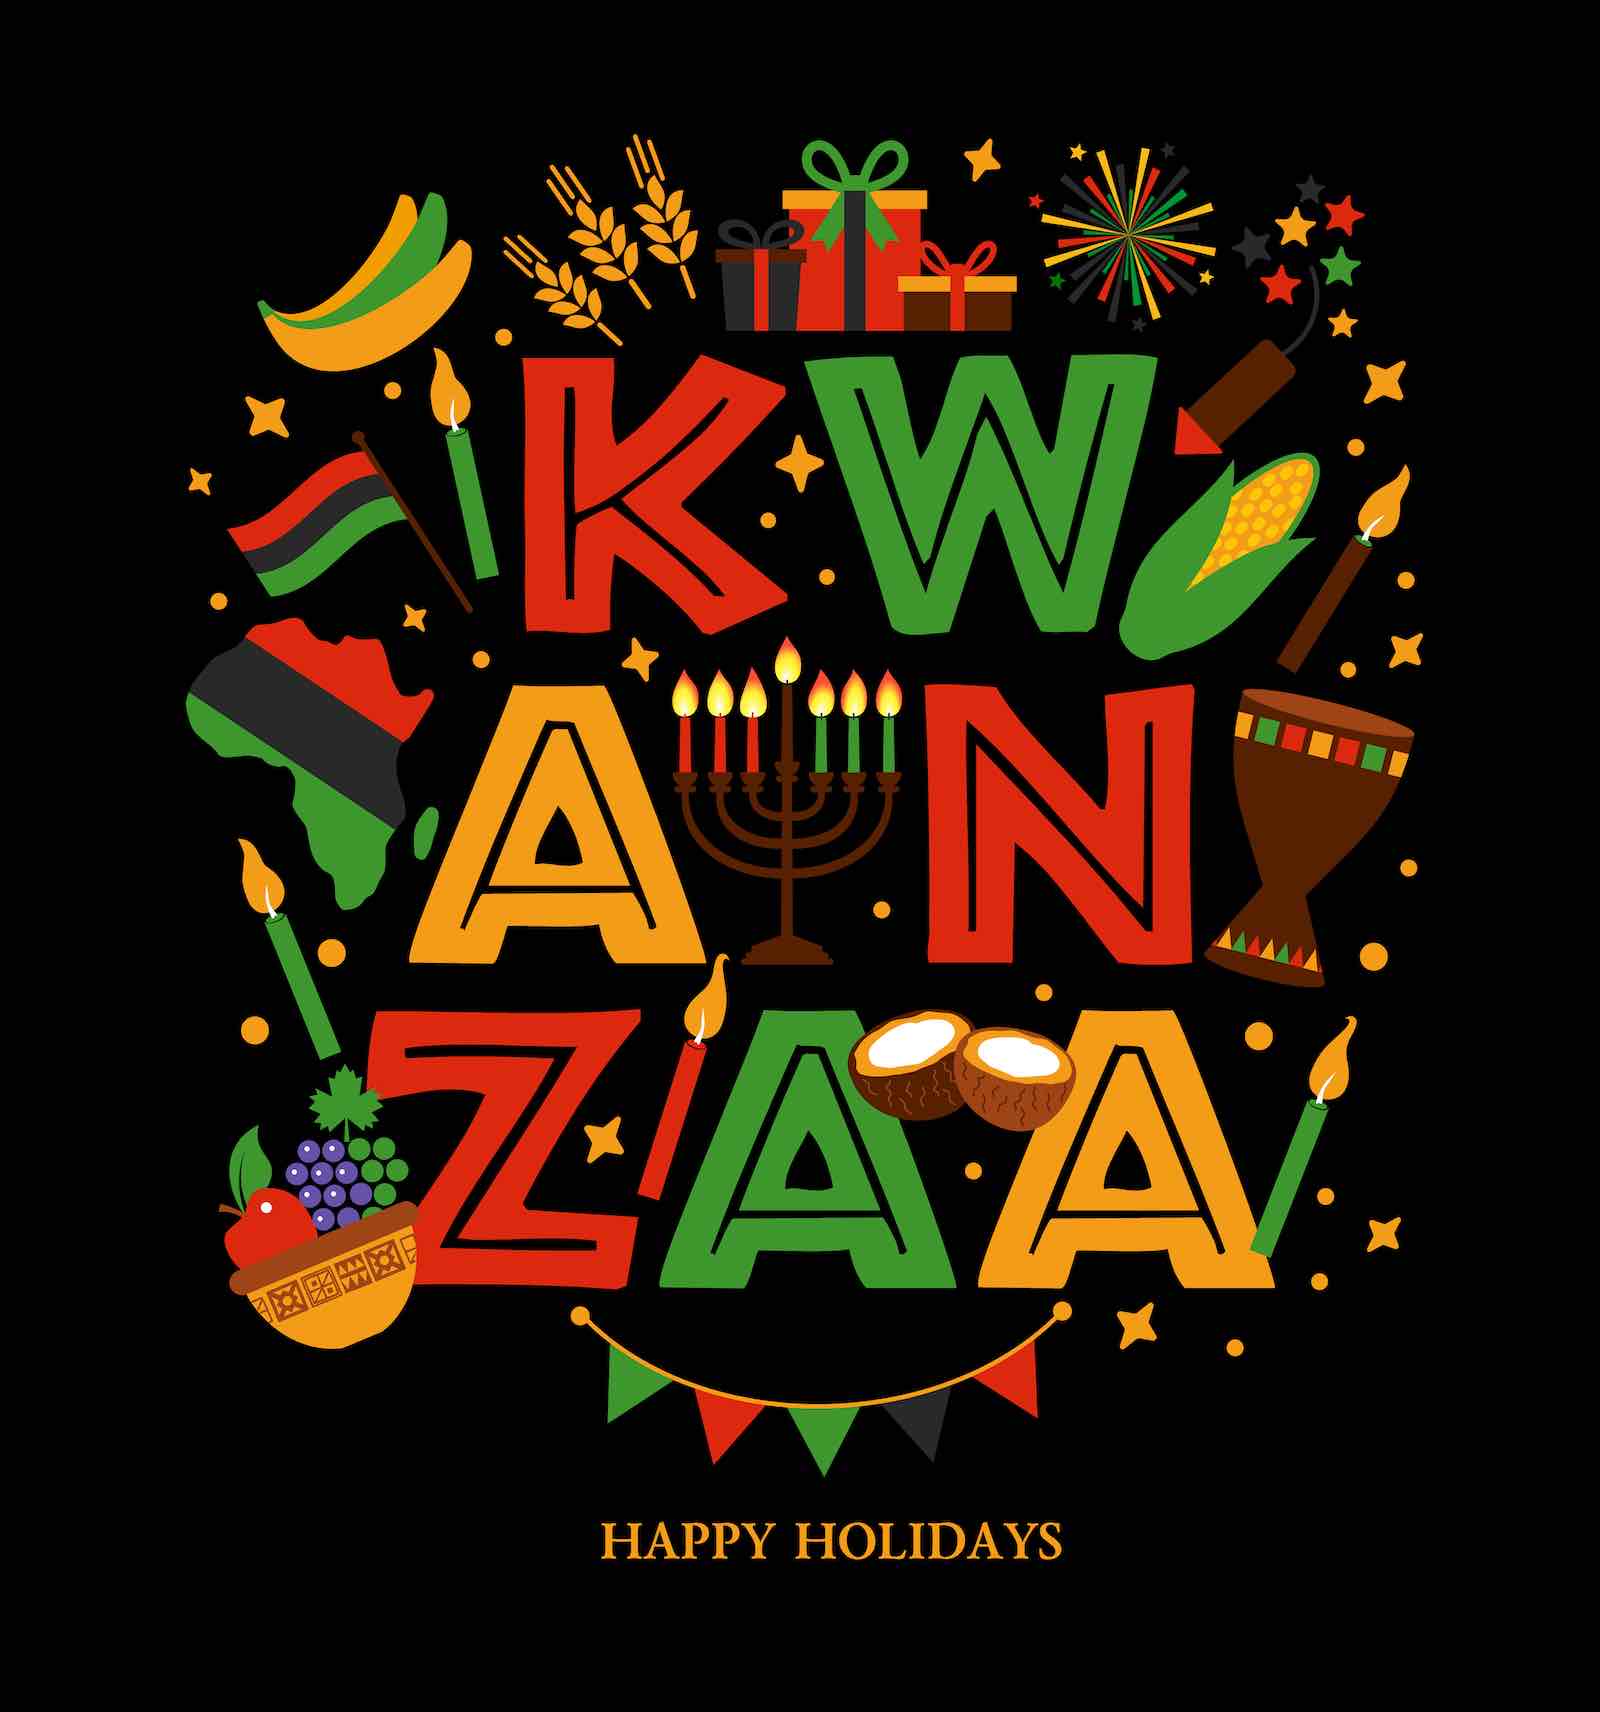 The Sunshine Circle Club is sponsoring a week-long celebration of Kwanzaa